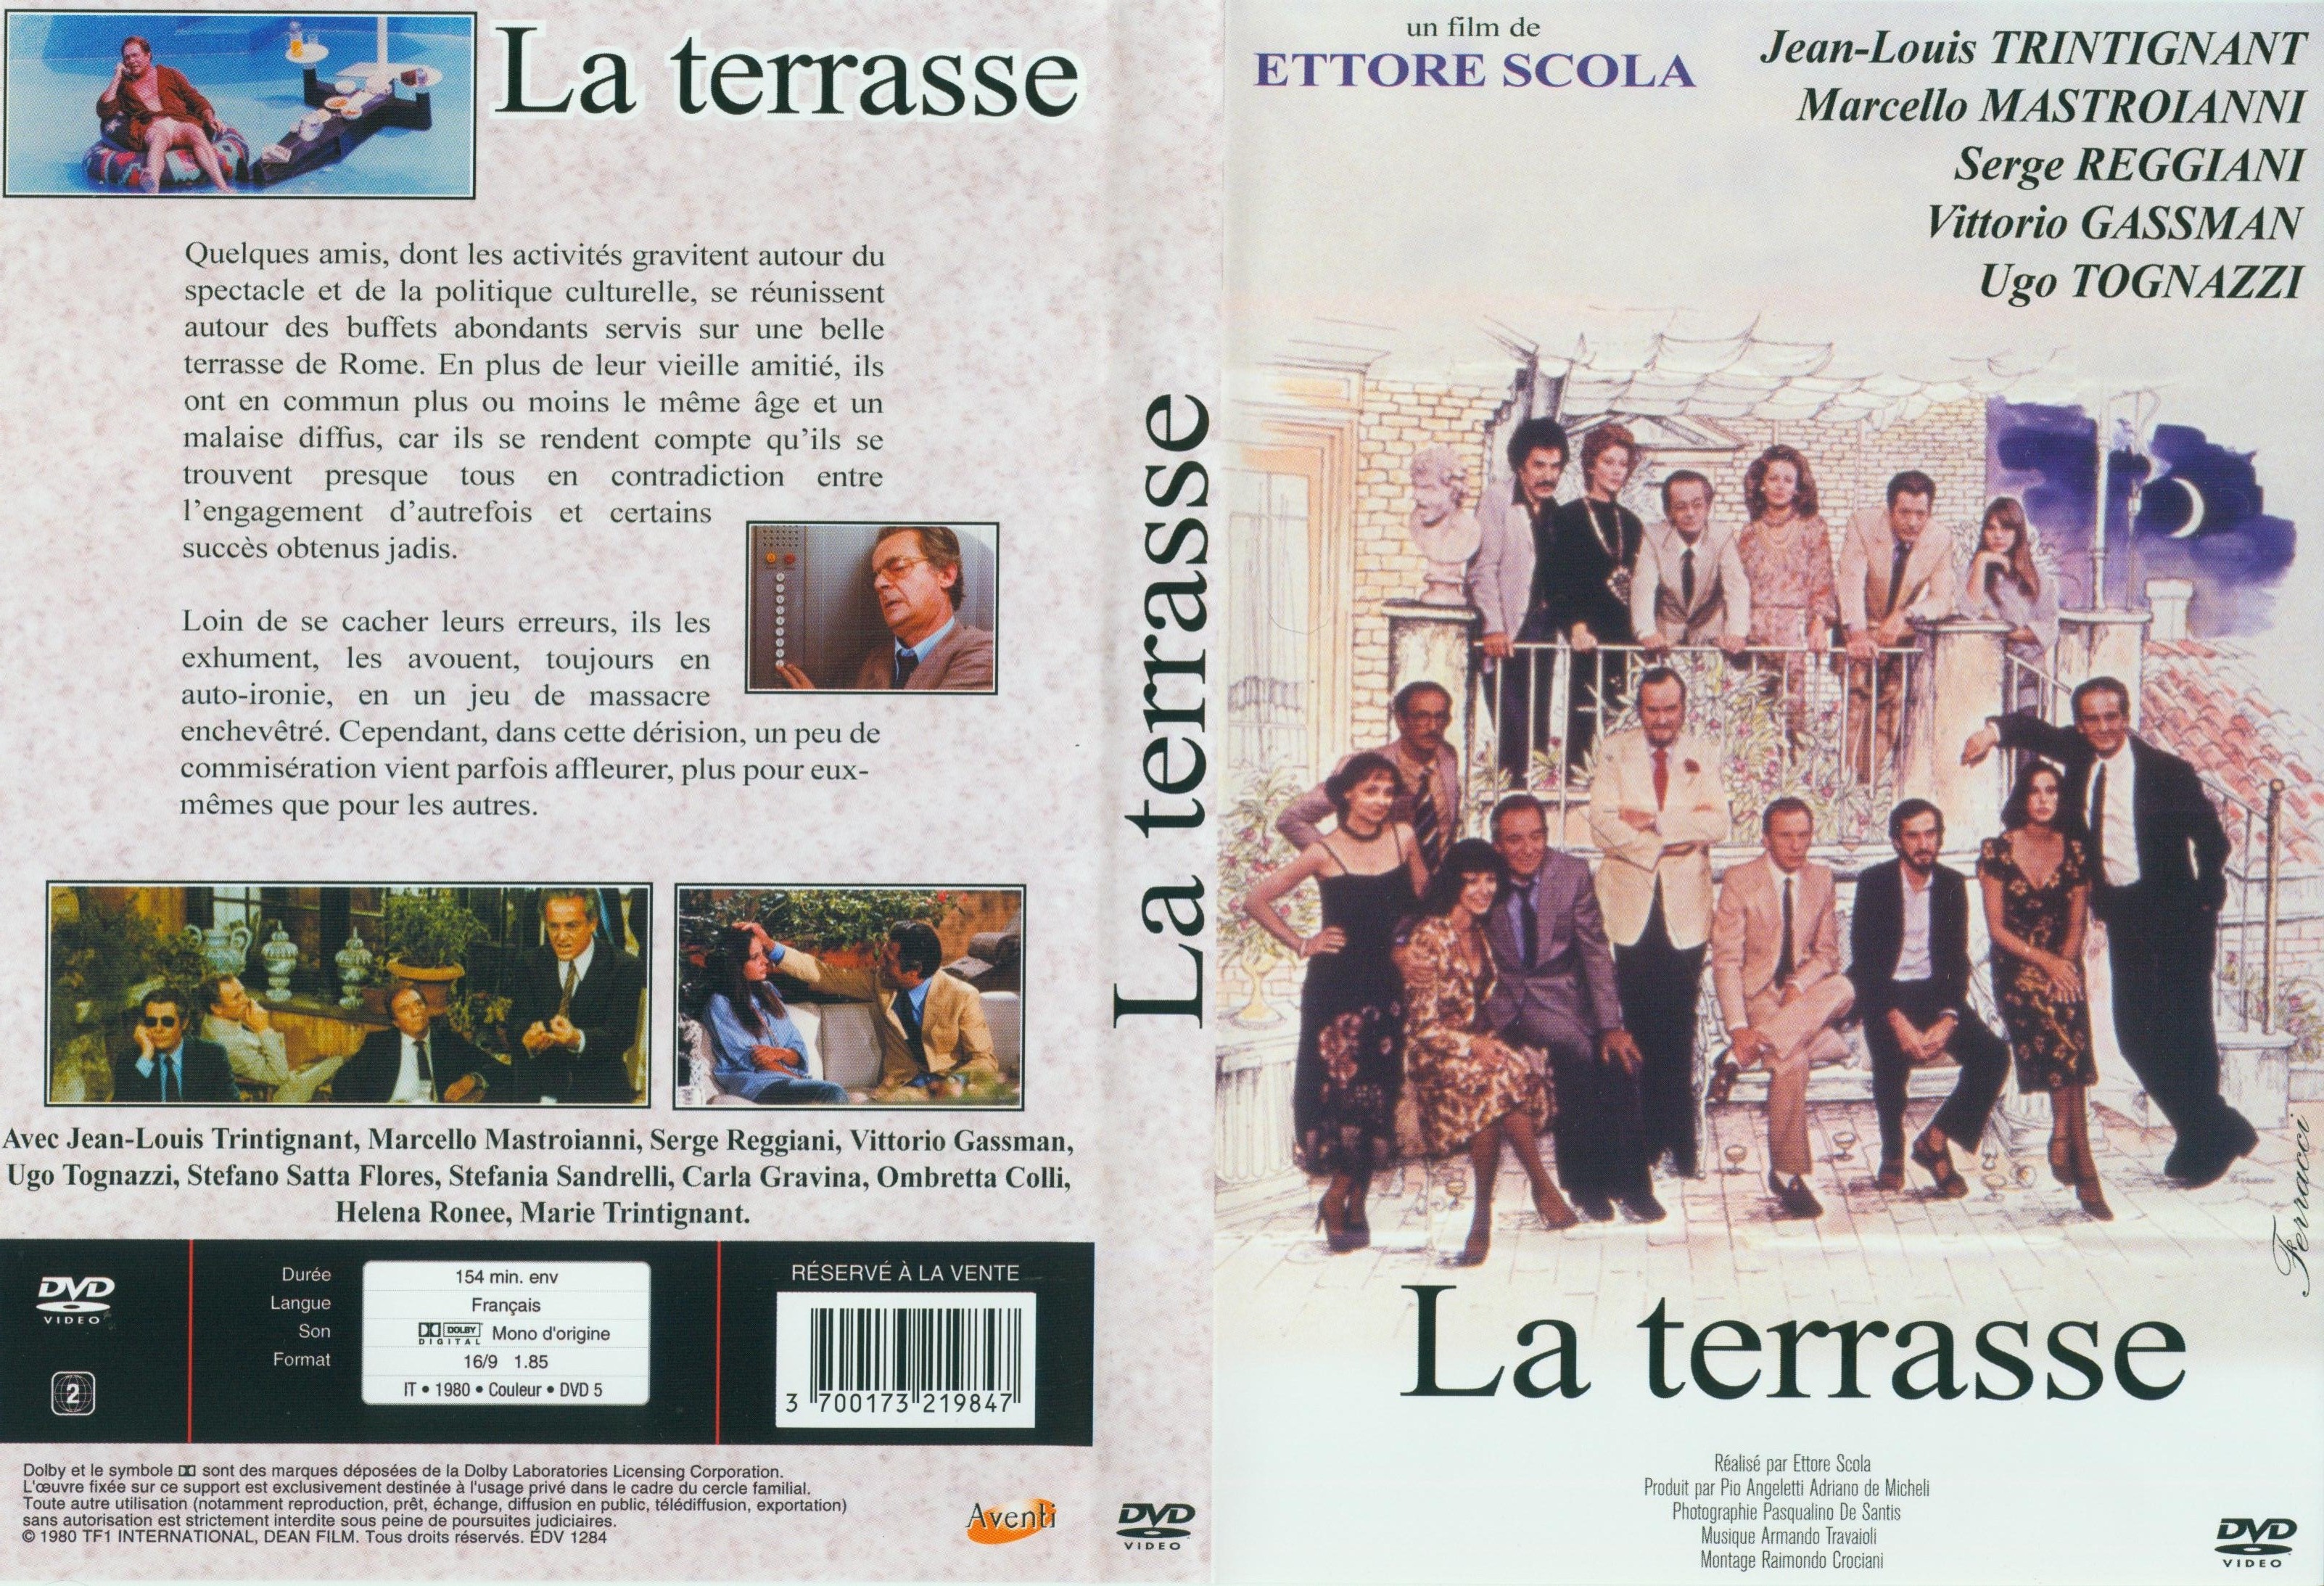 Jaquette DVD La terrasse v2